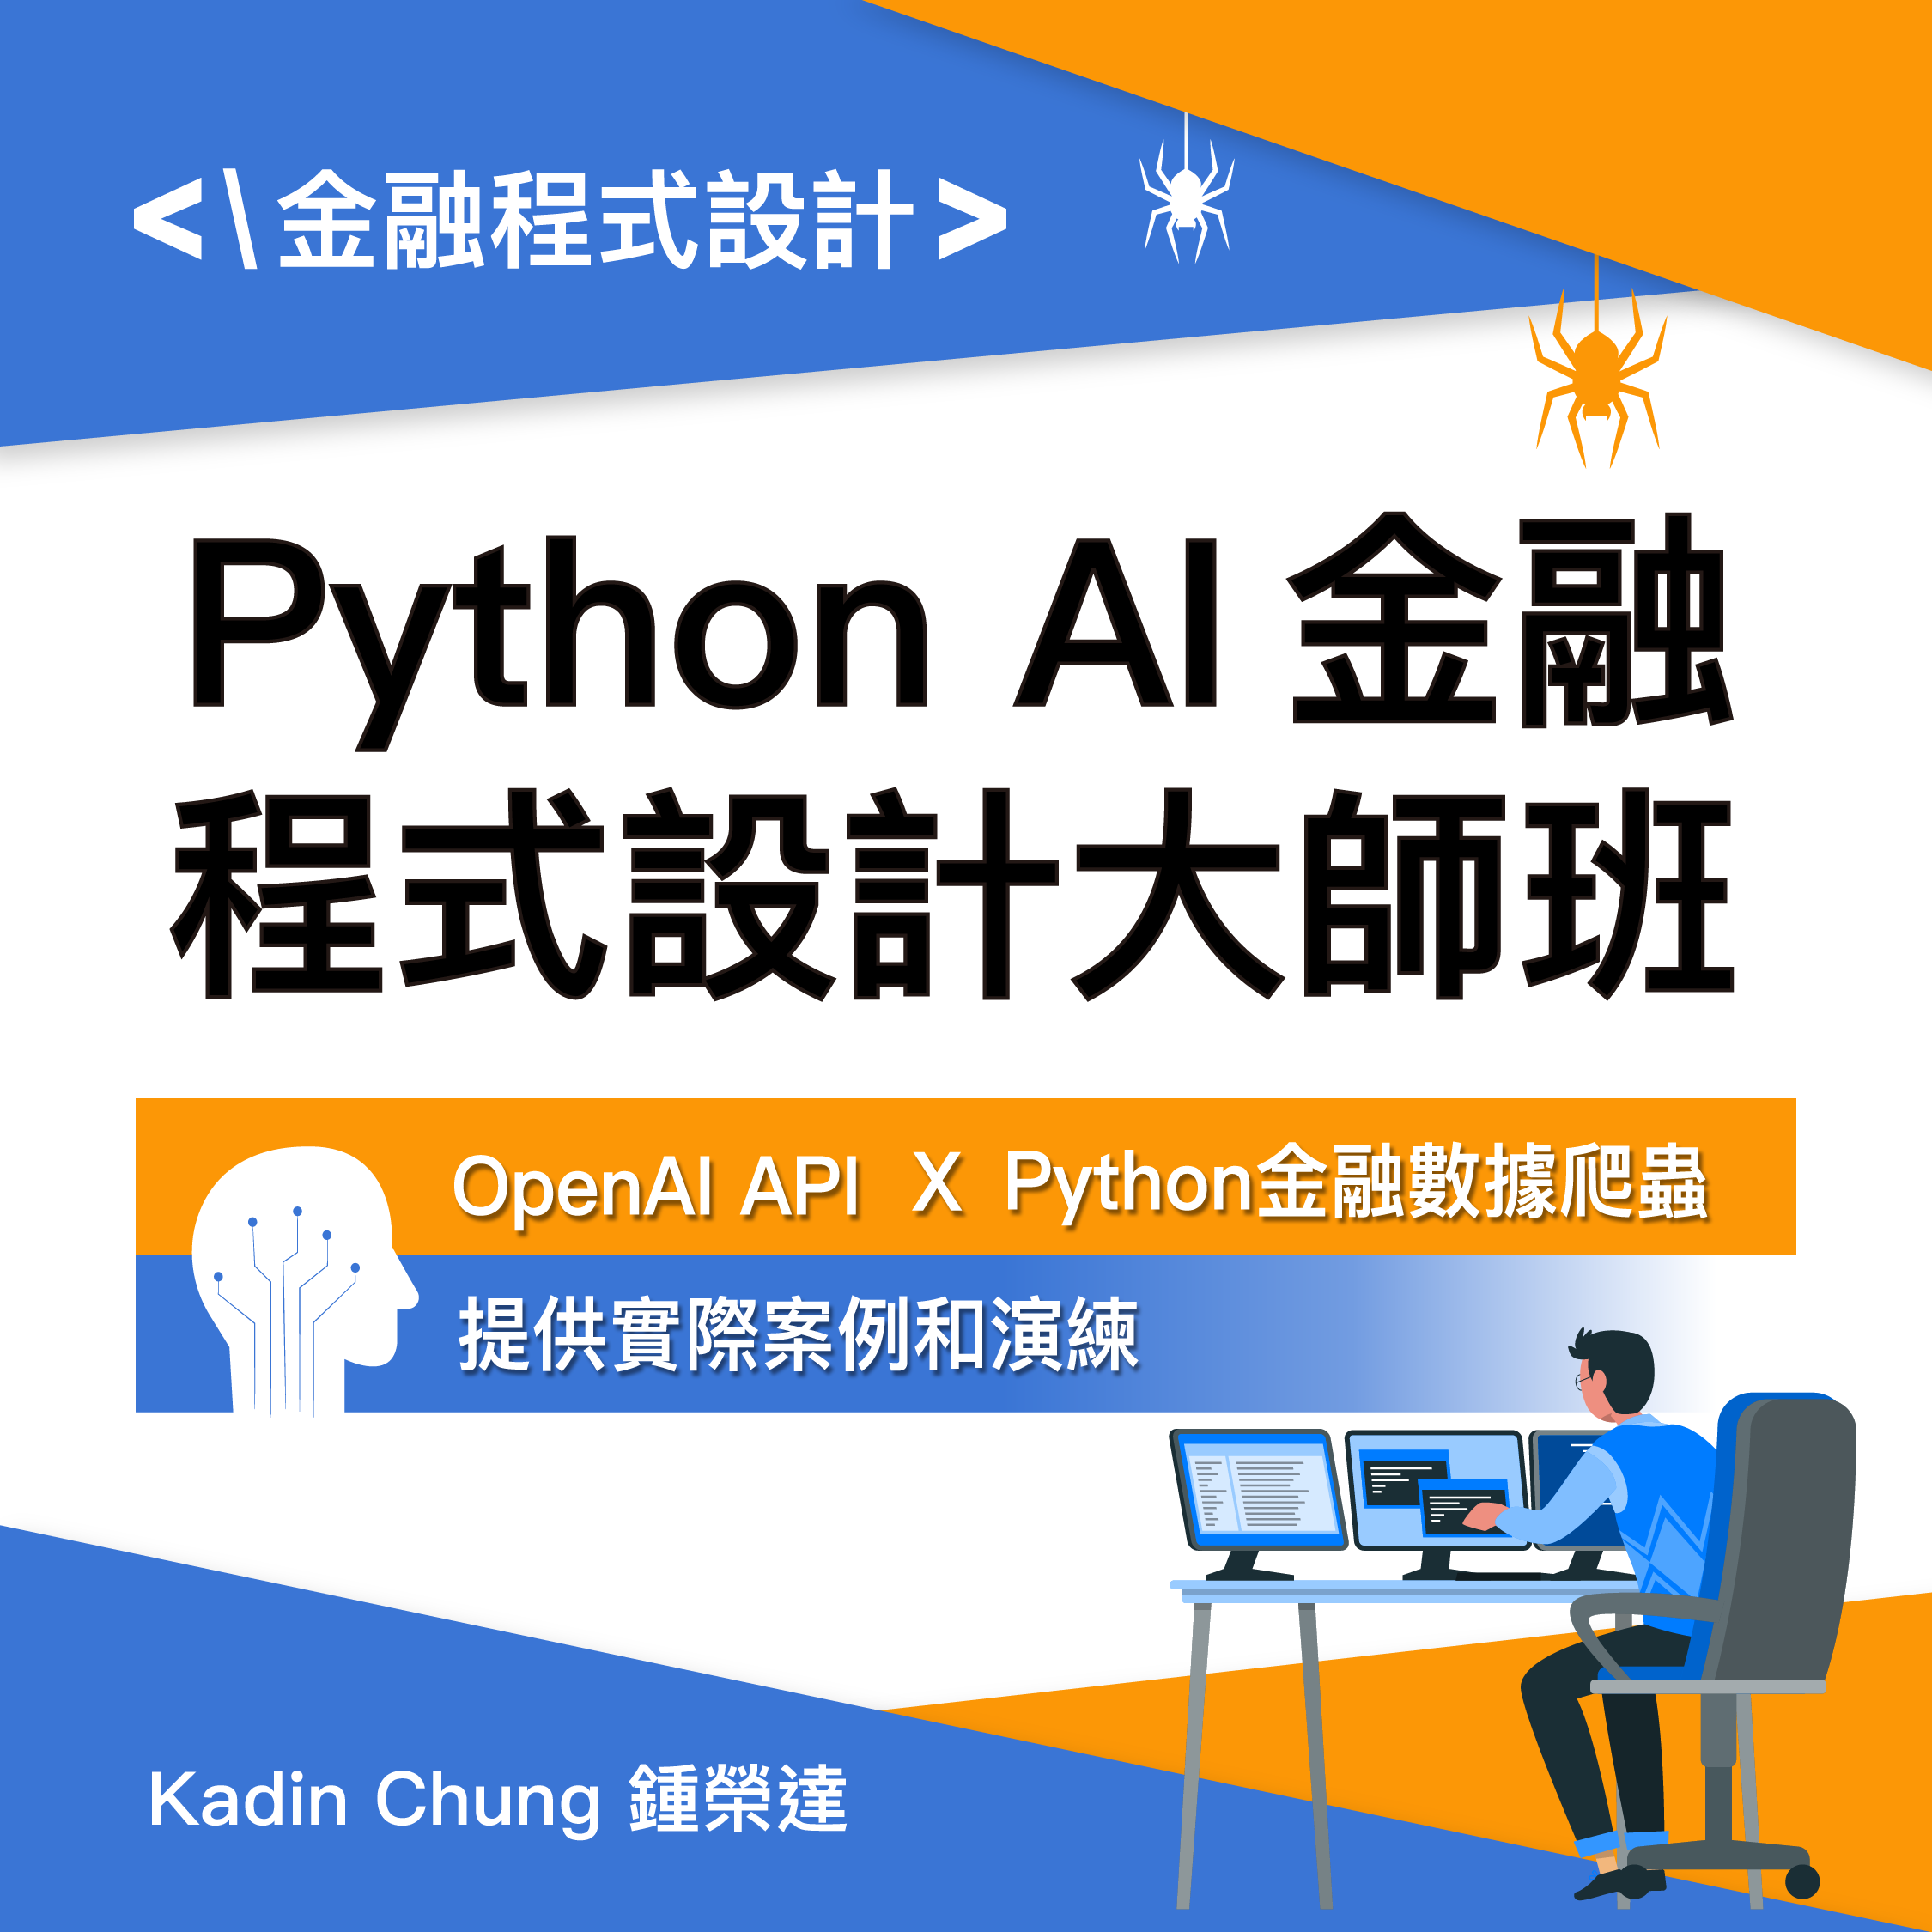 Python AI 金融程式設計大師班